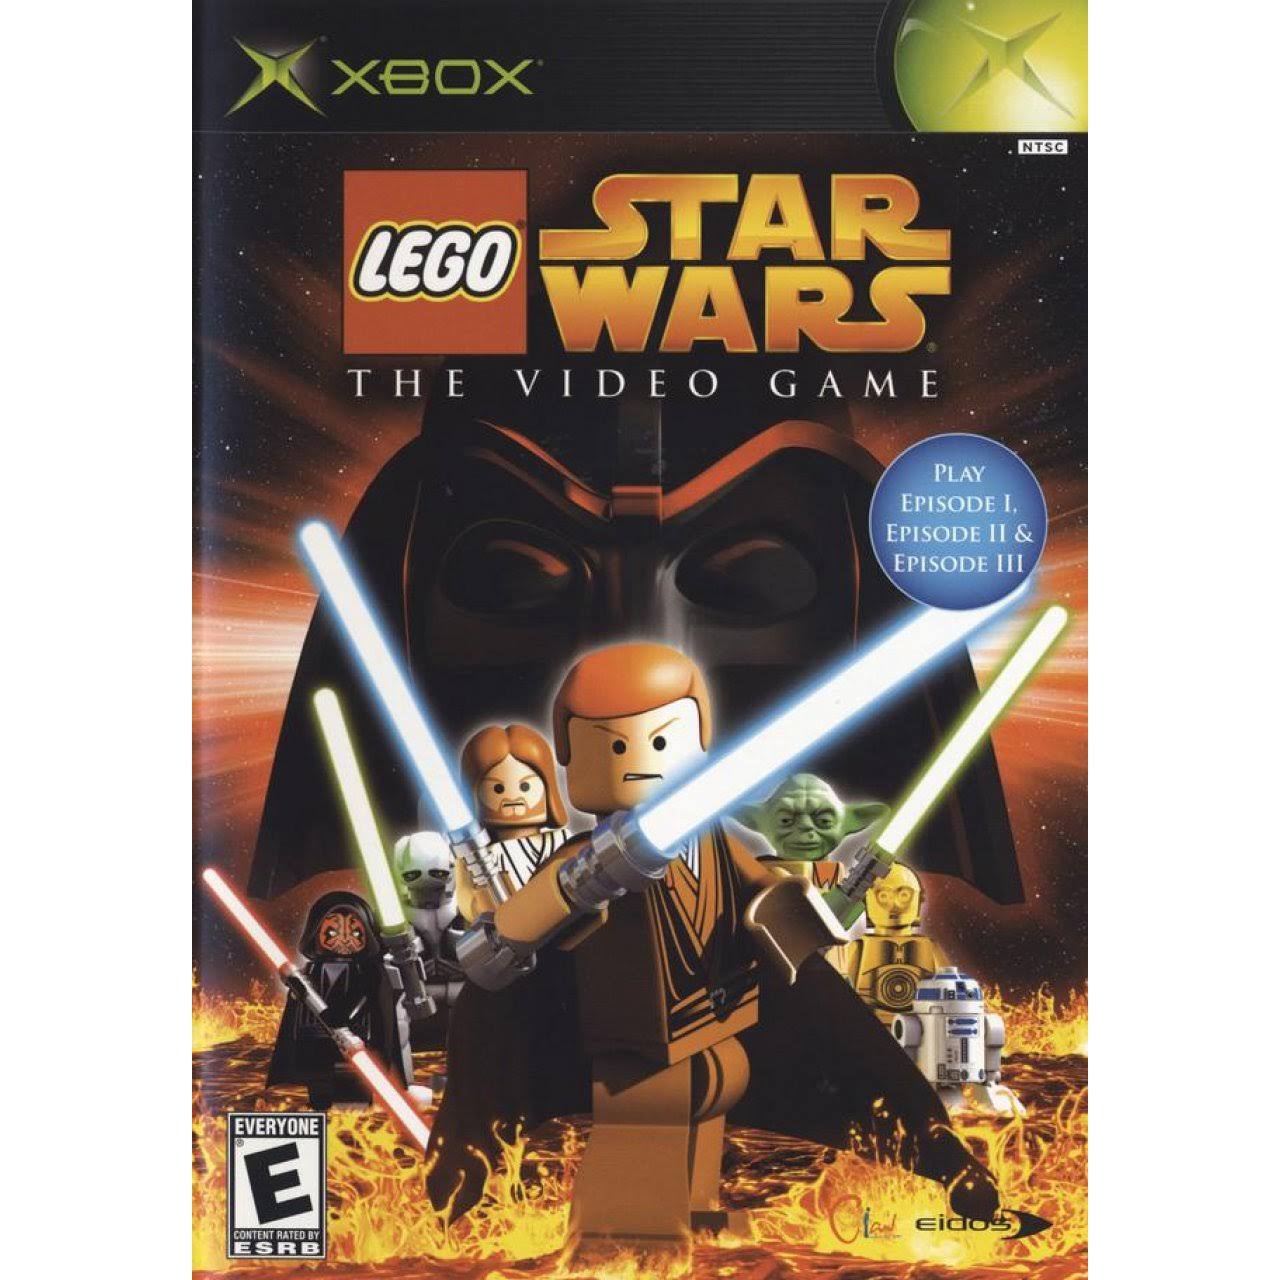 Lego Star Wars - Xbox